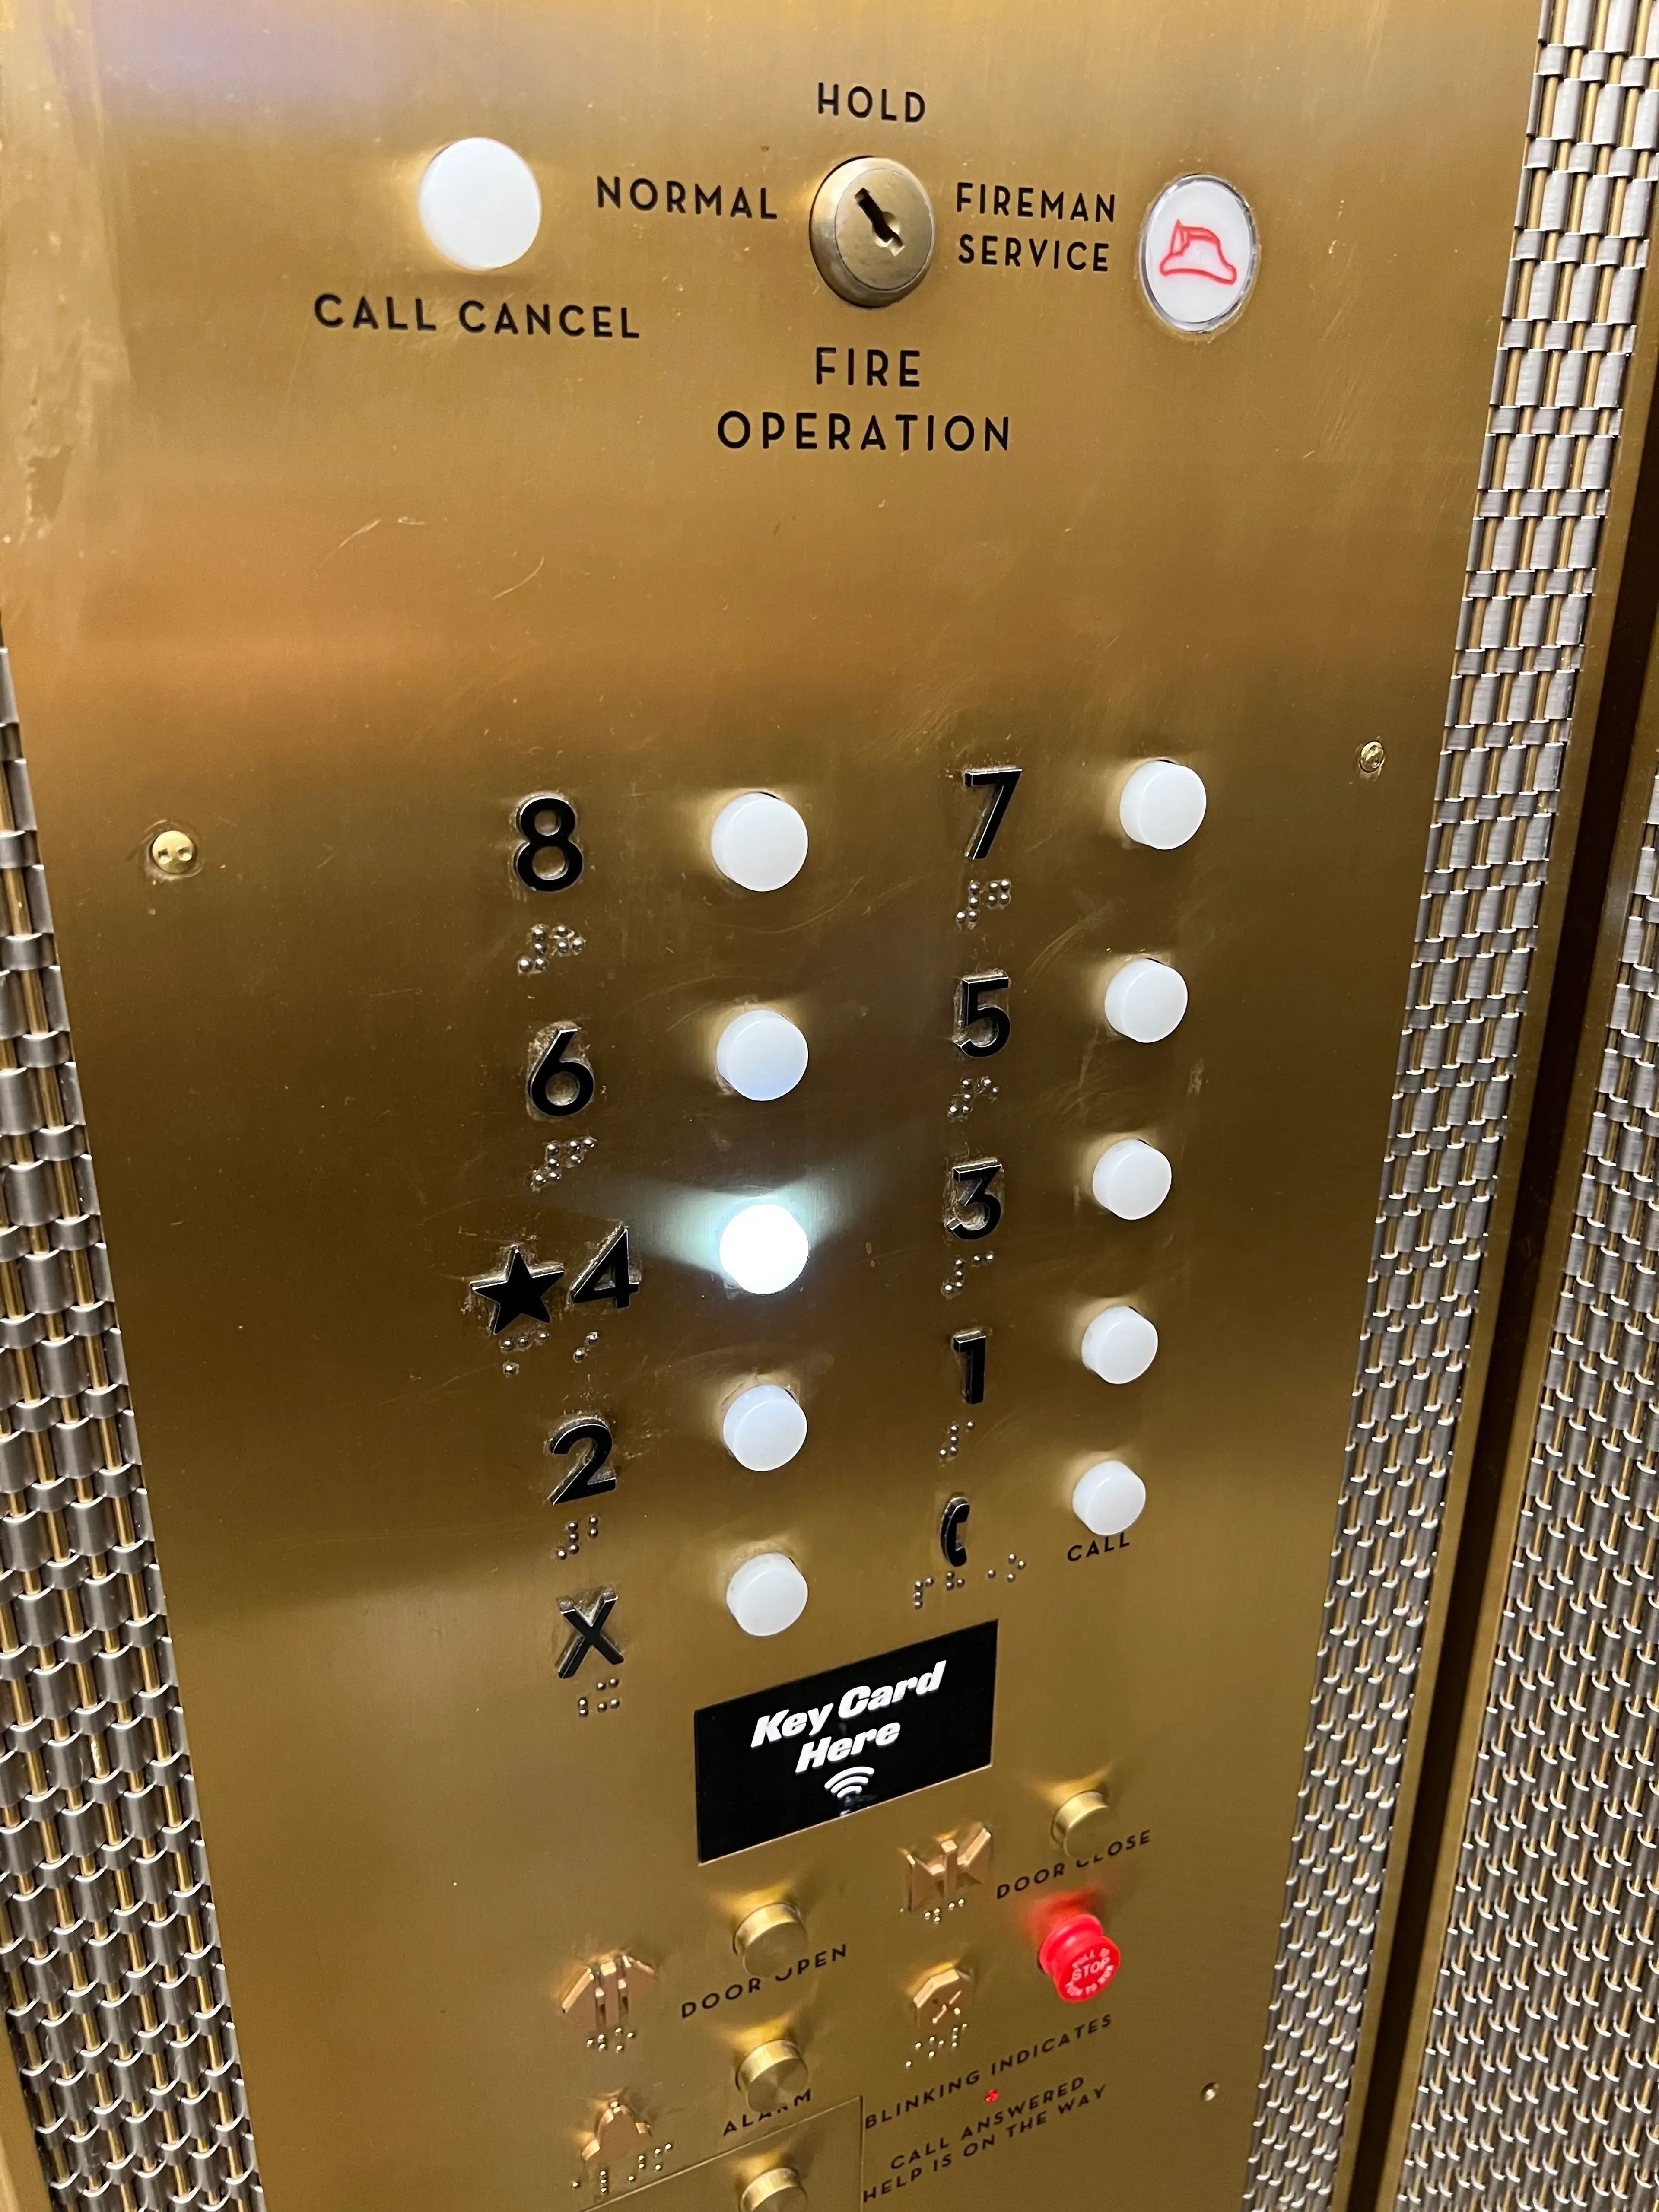 TWA HOTEL elevator buttons